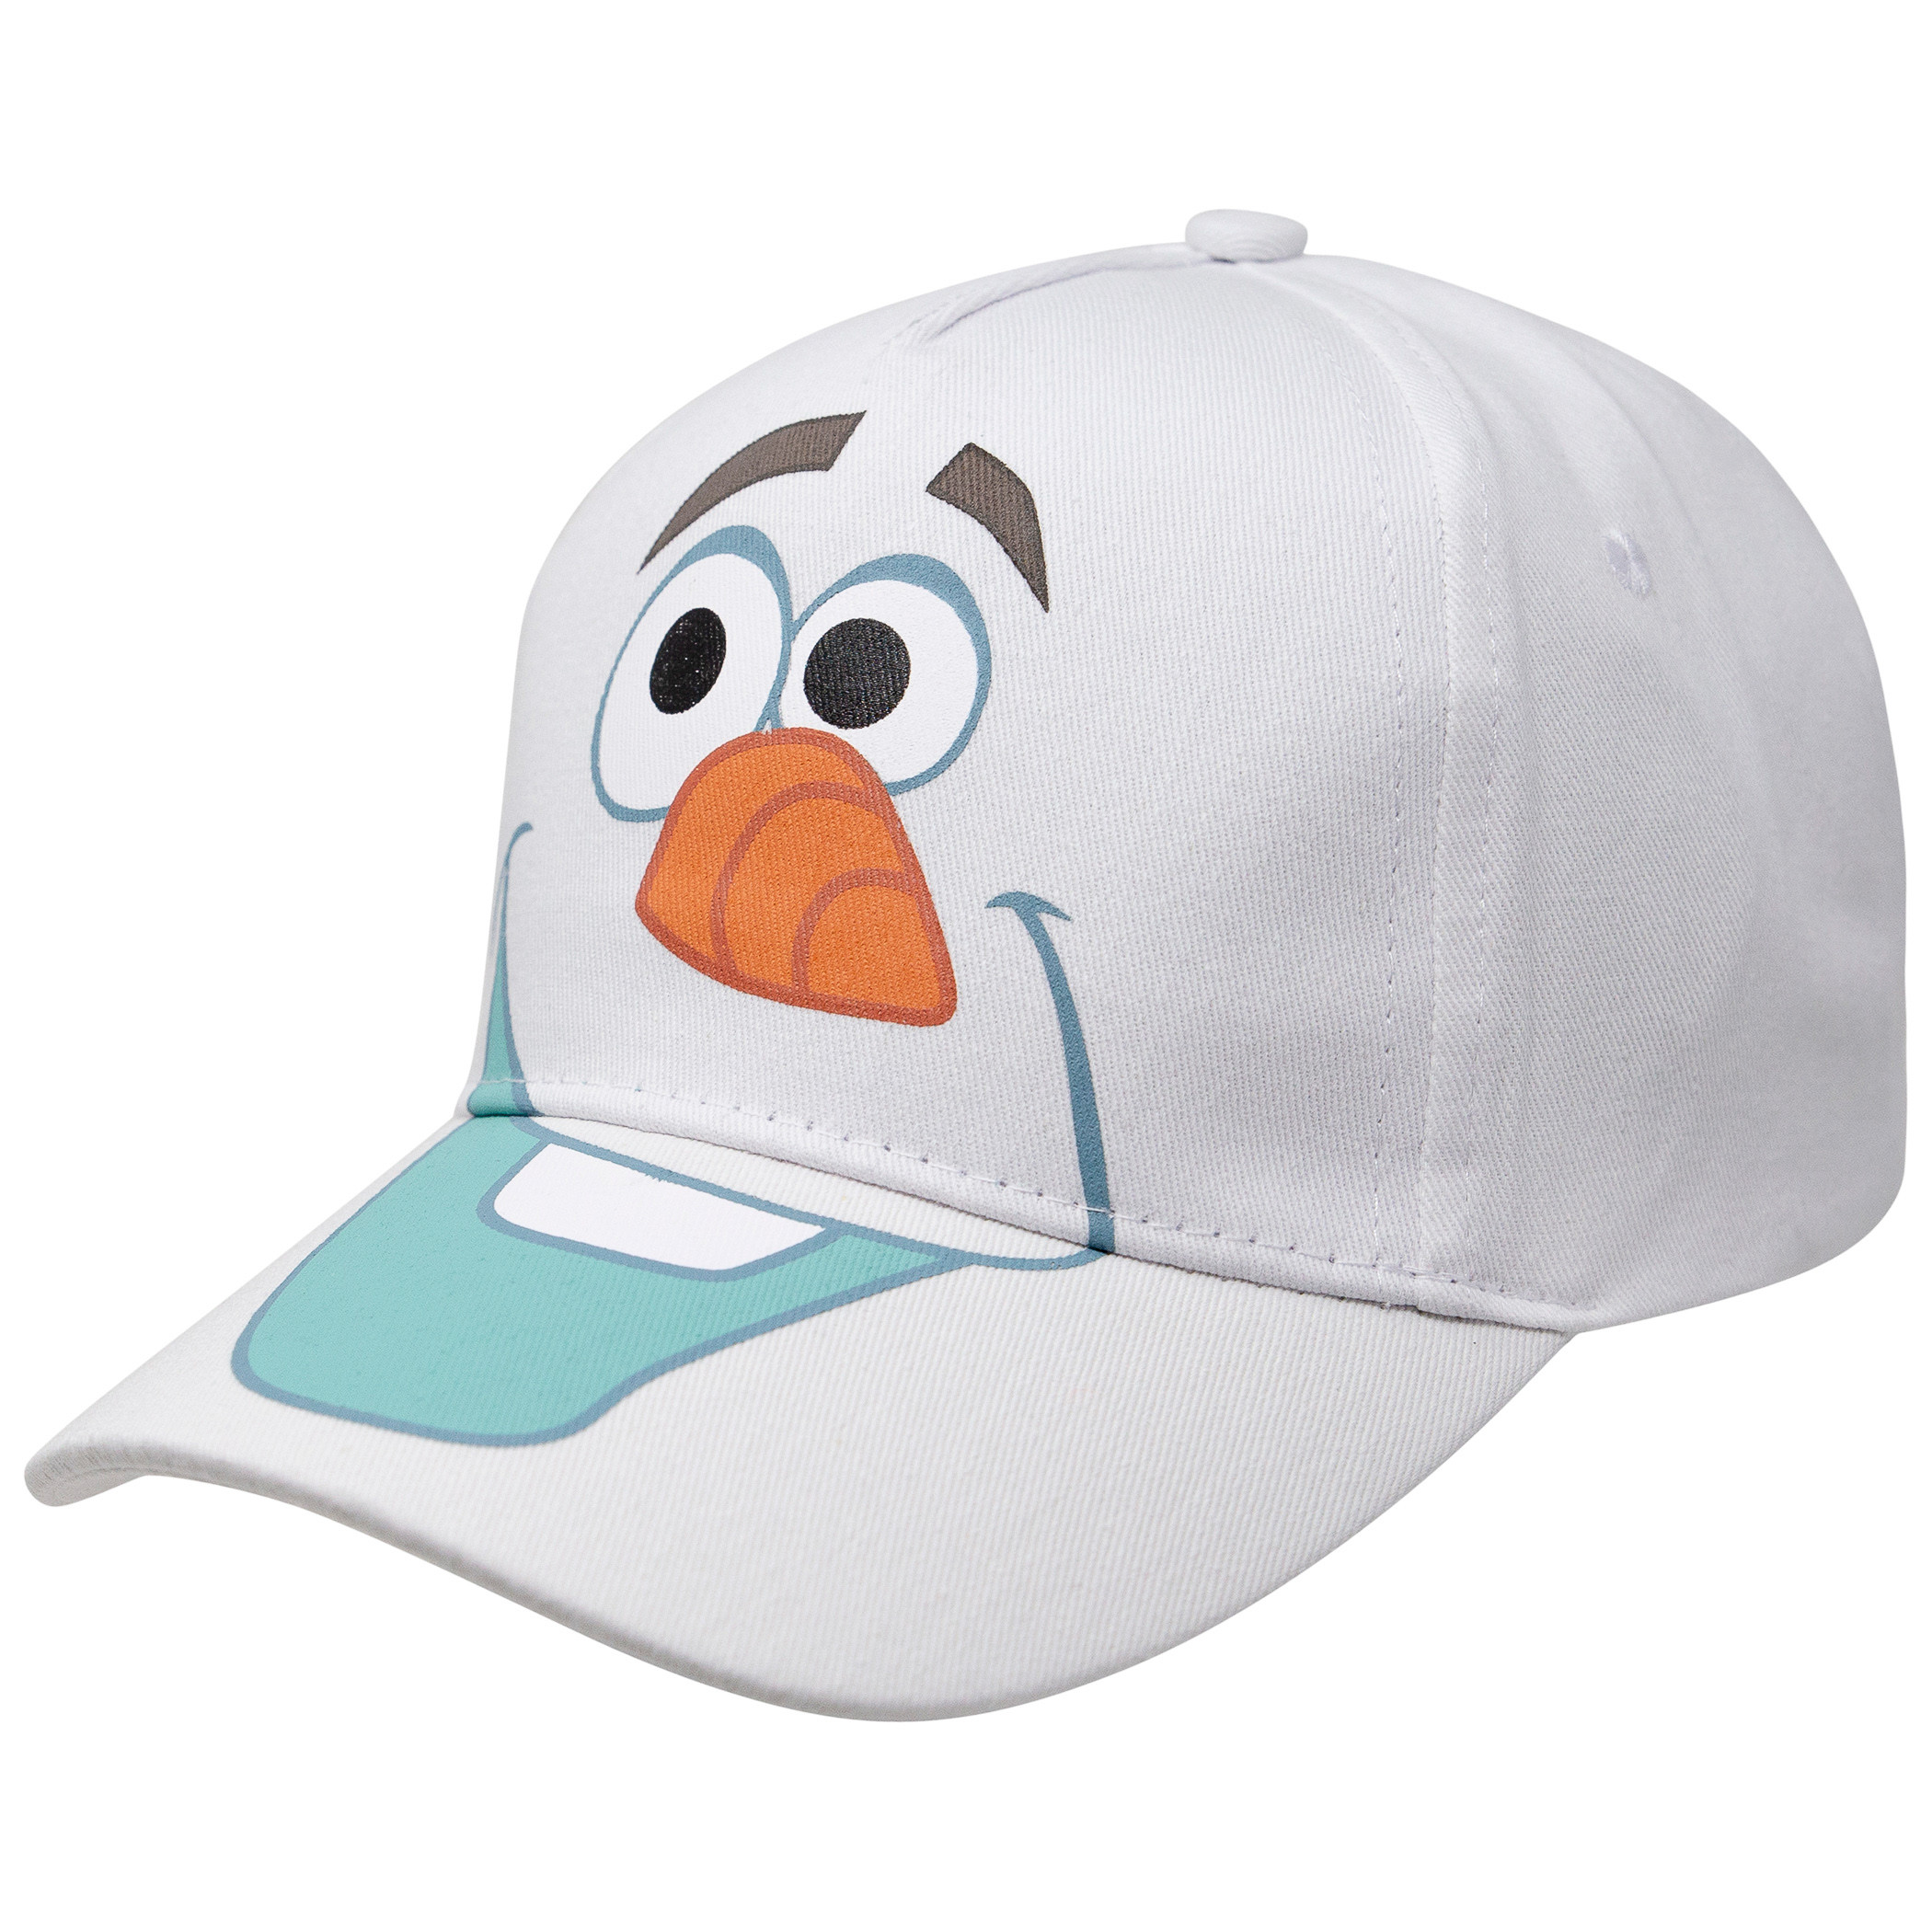 Disney Official Licensed Frozen Olaf Cheese Toddler Kids Hat Cap $17 BJ